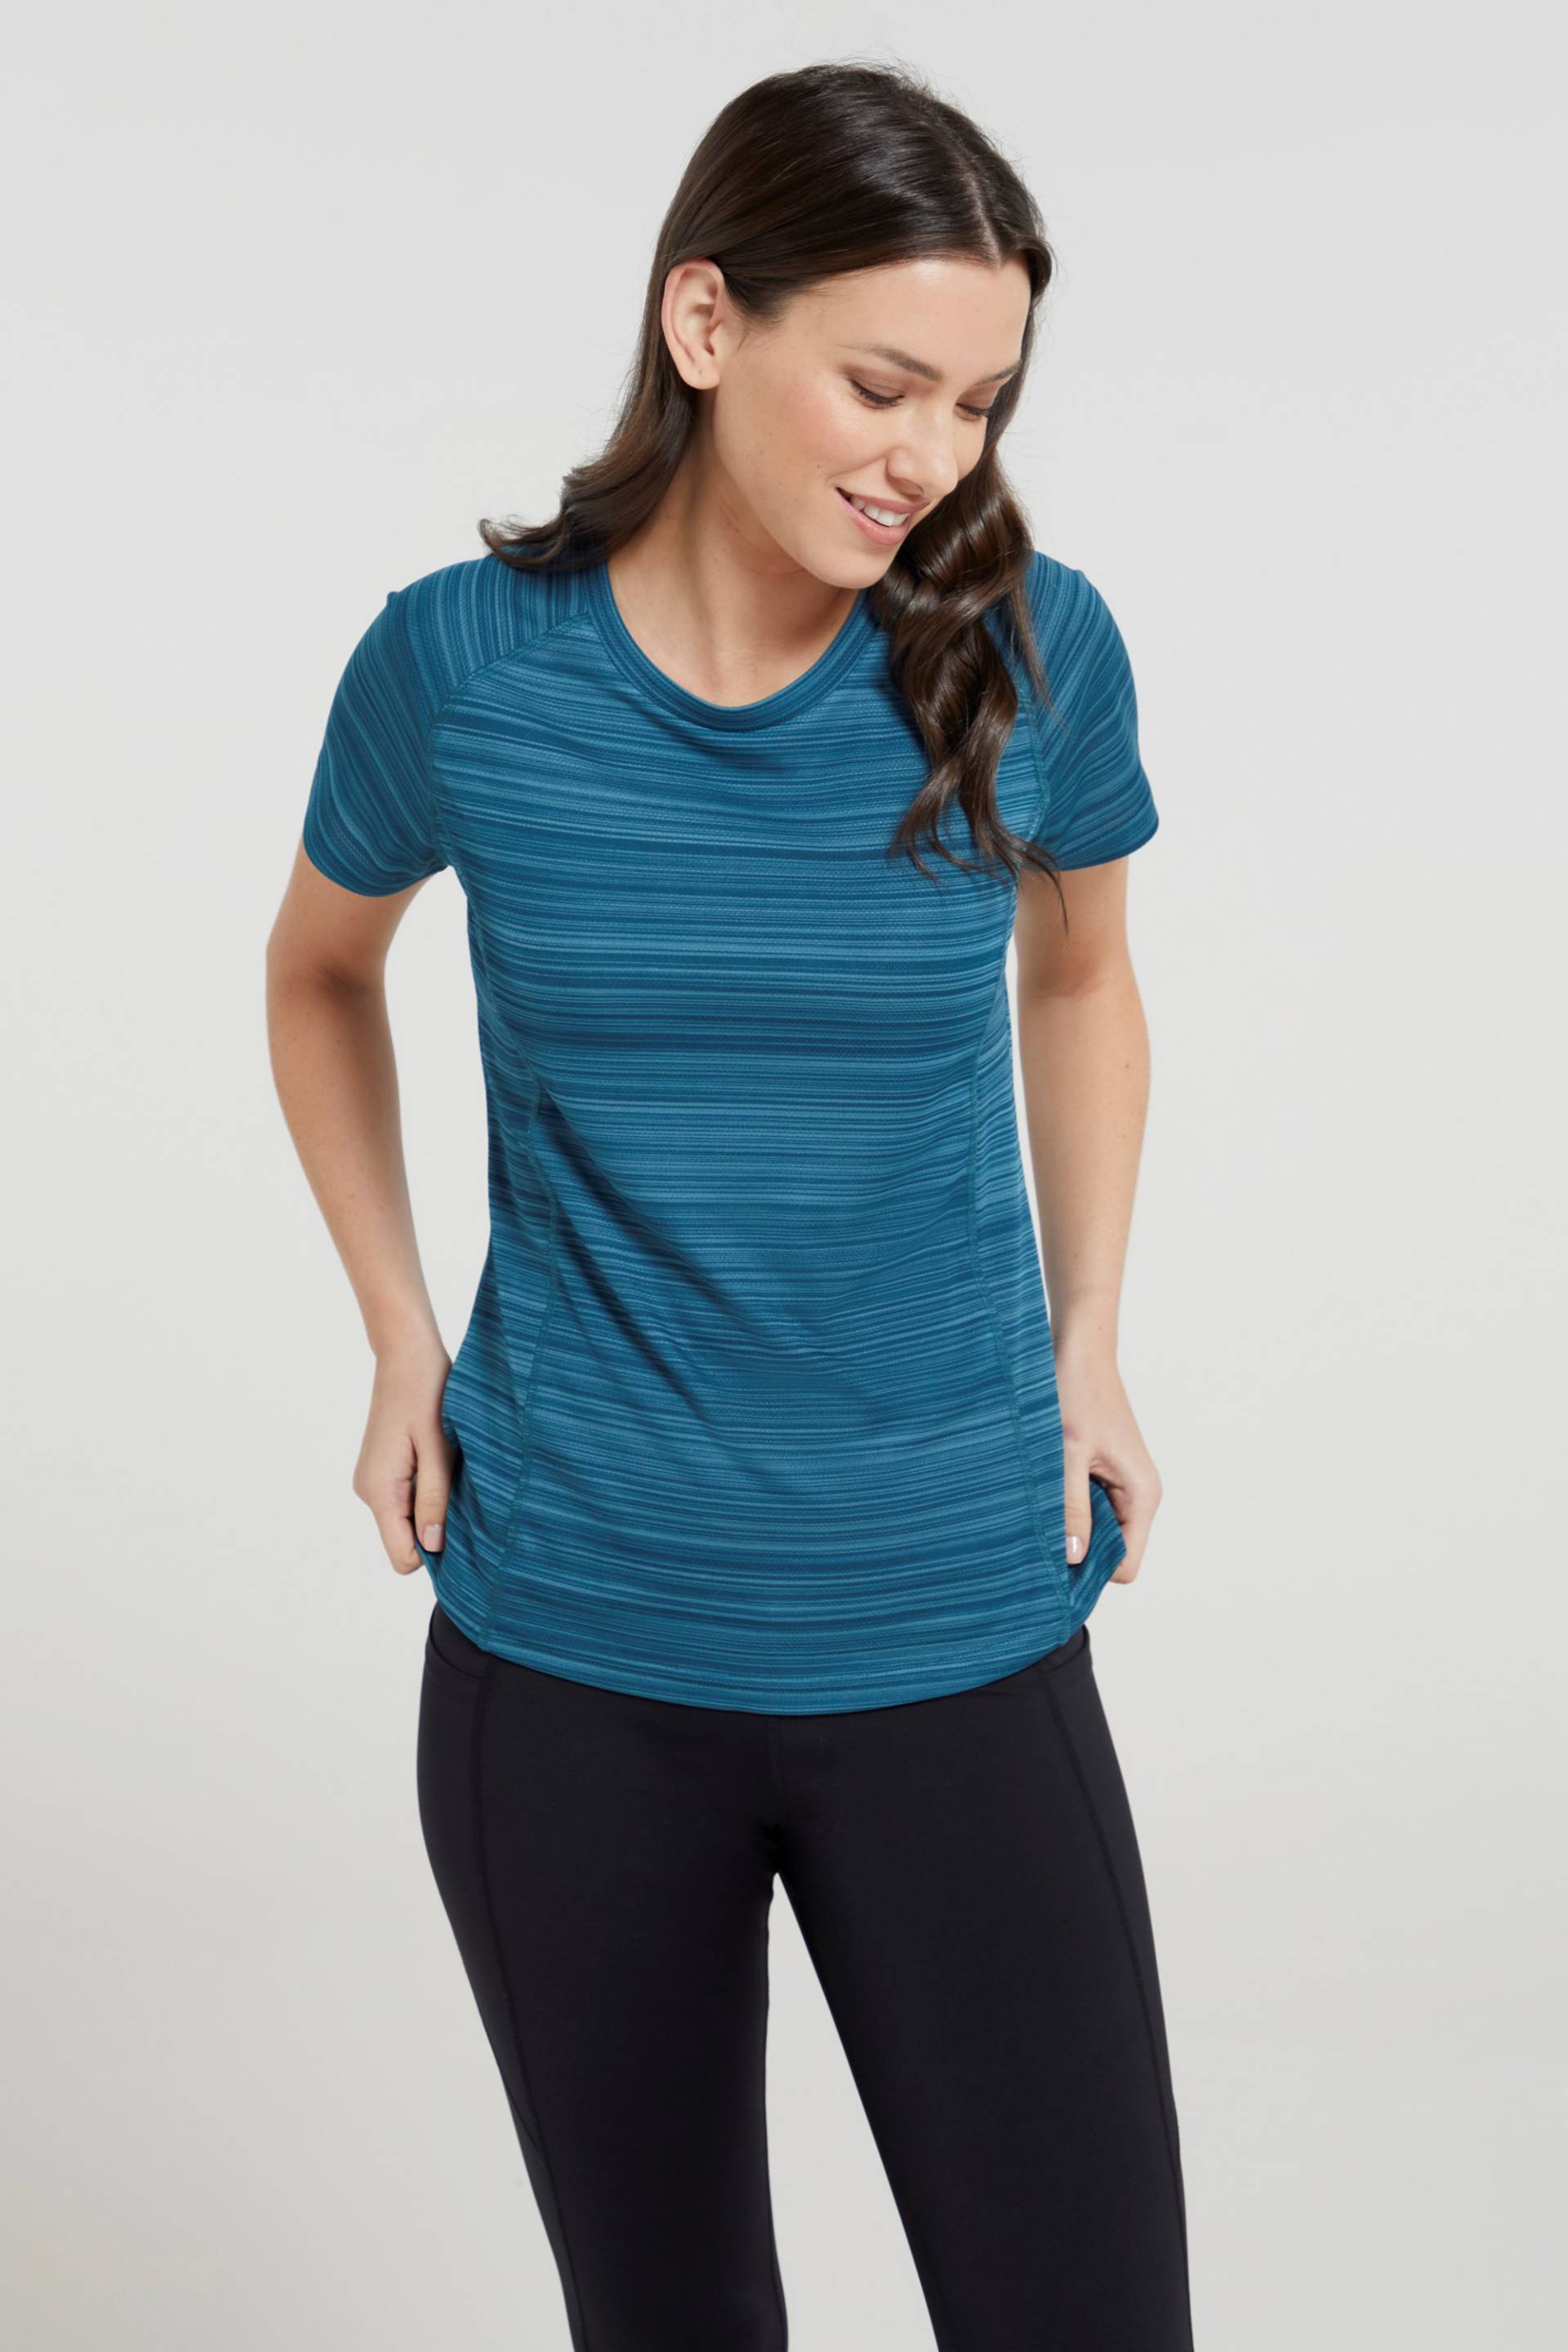 Endurance Damen T-Shirt - Gestreift - Aquamarin von Mountain Warehouse